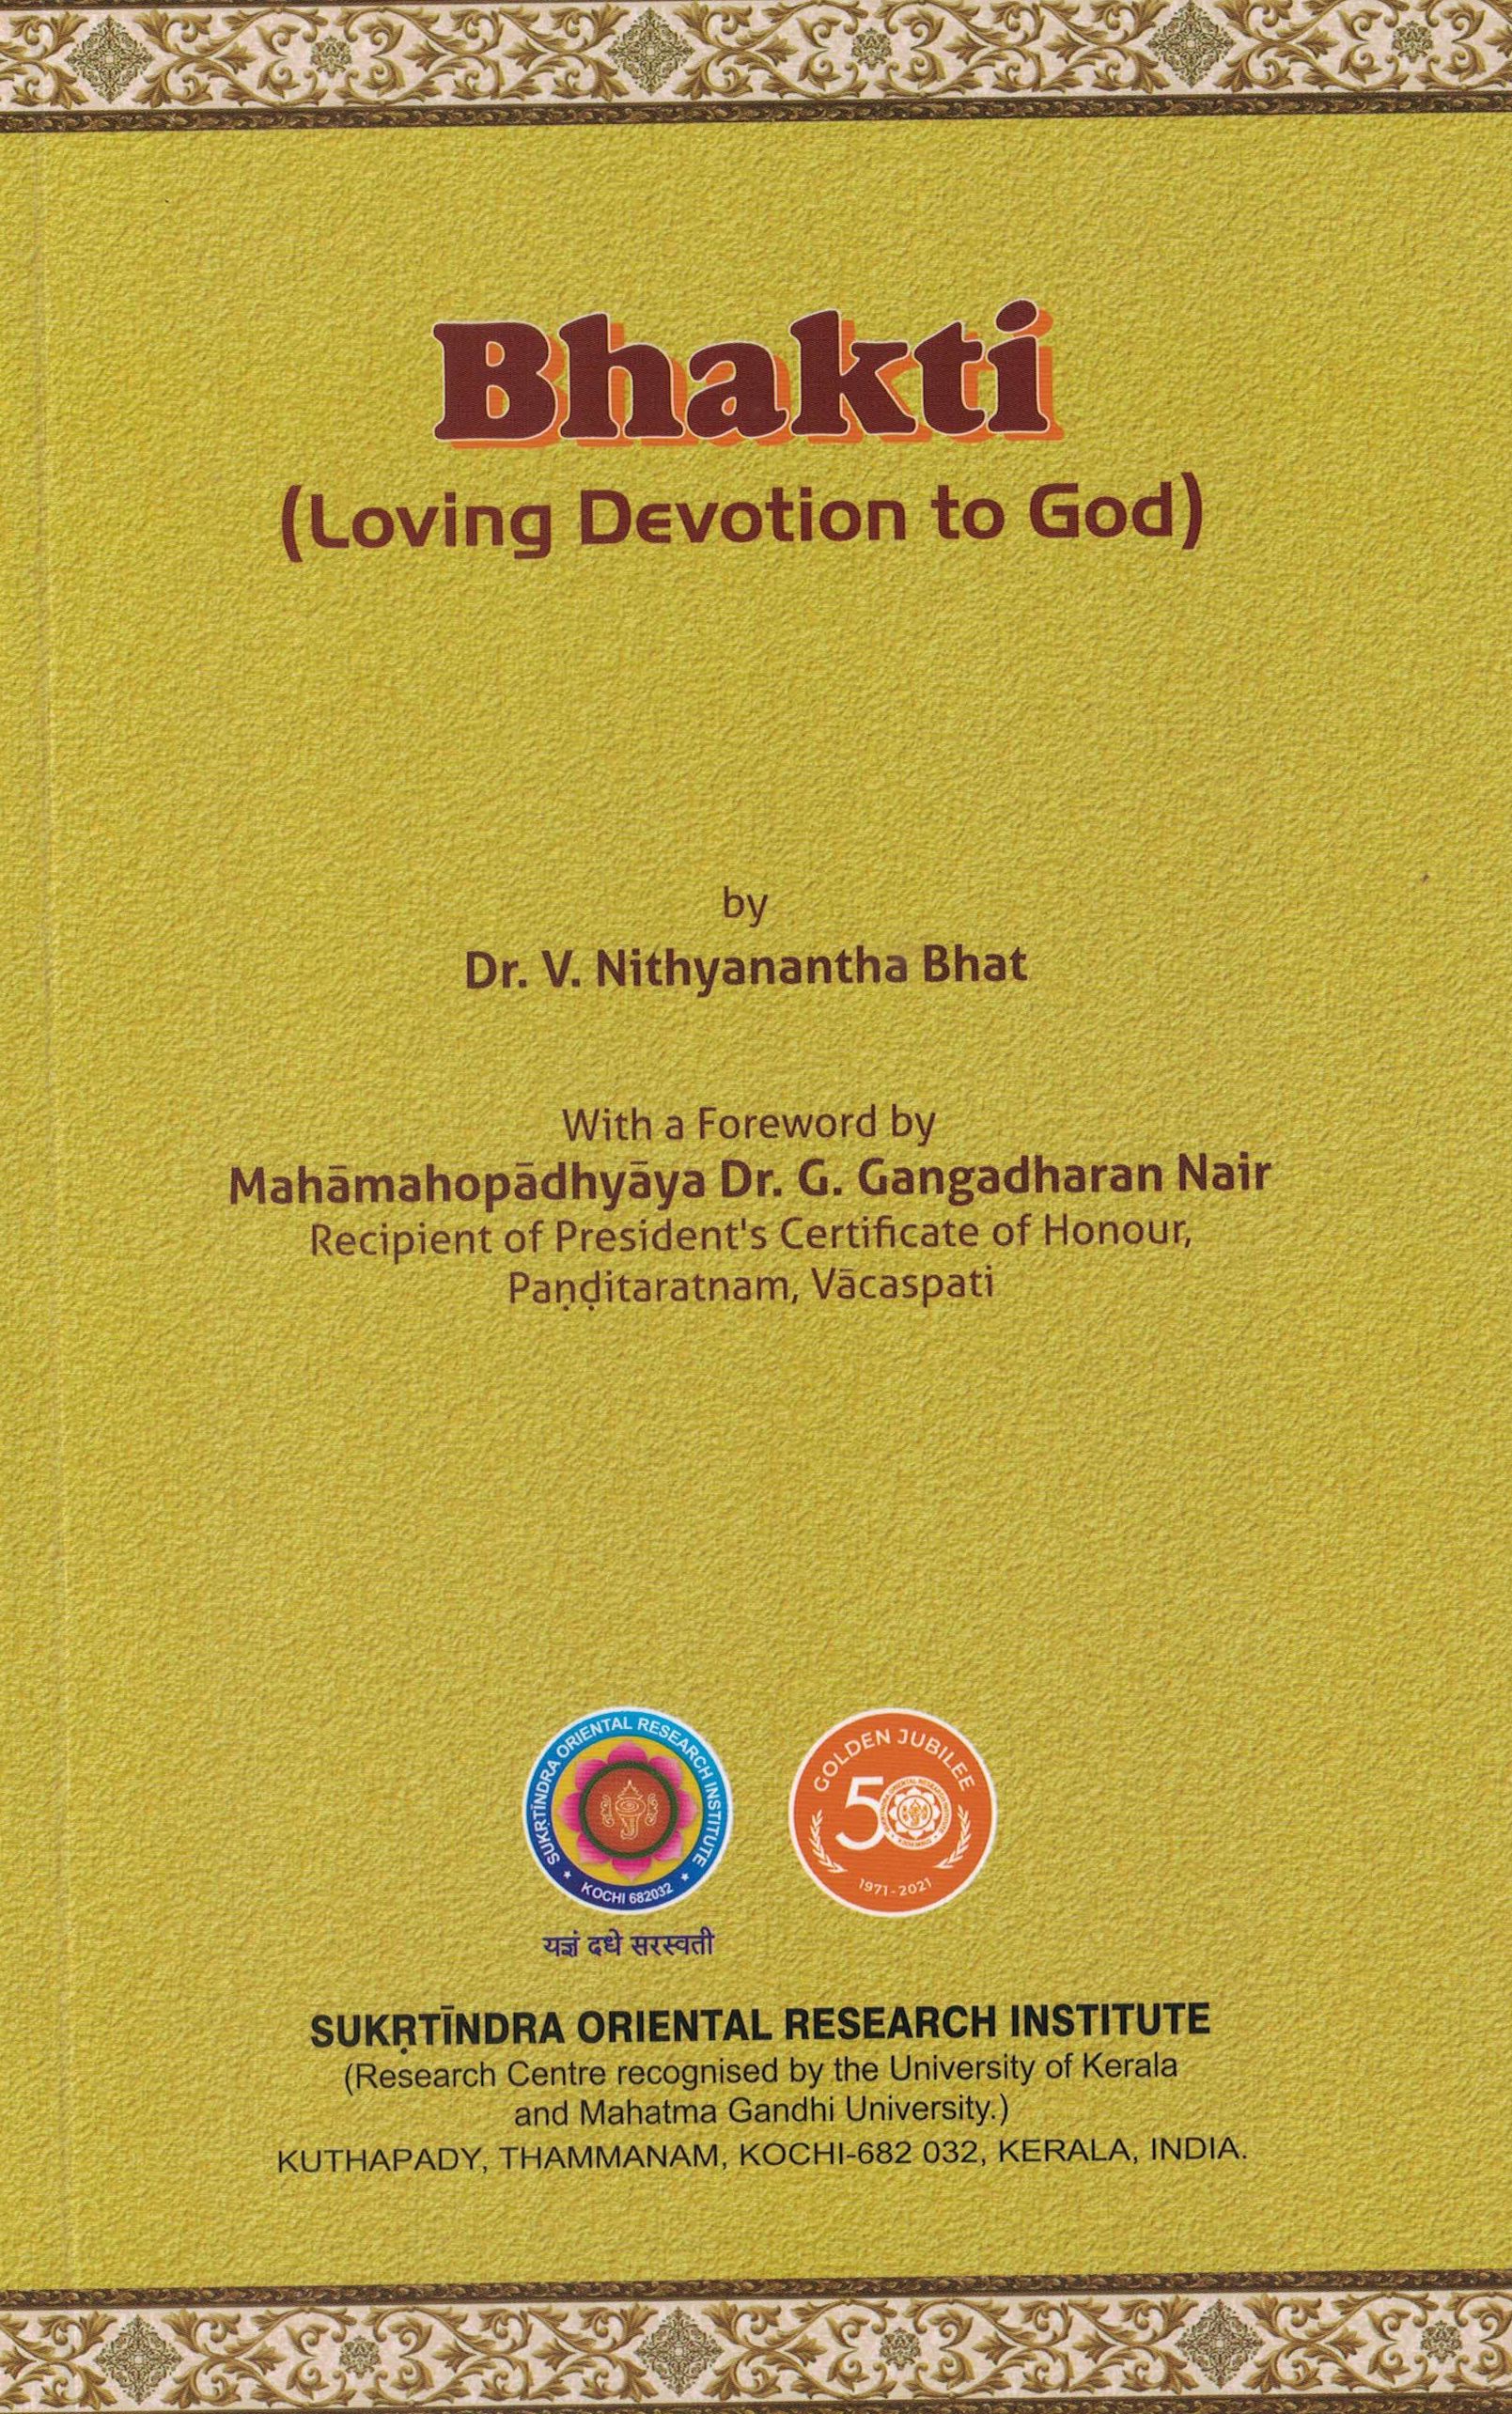 Bhakti - Loving Devotion to God